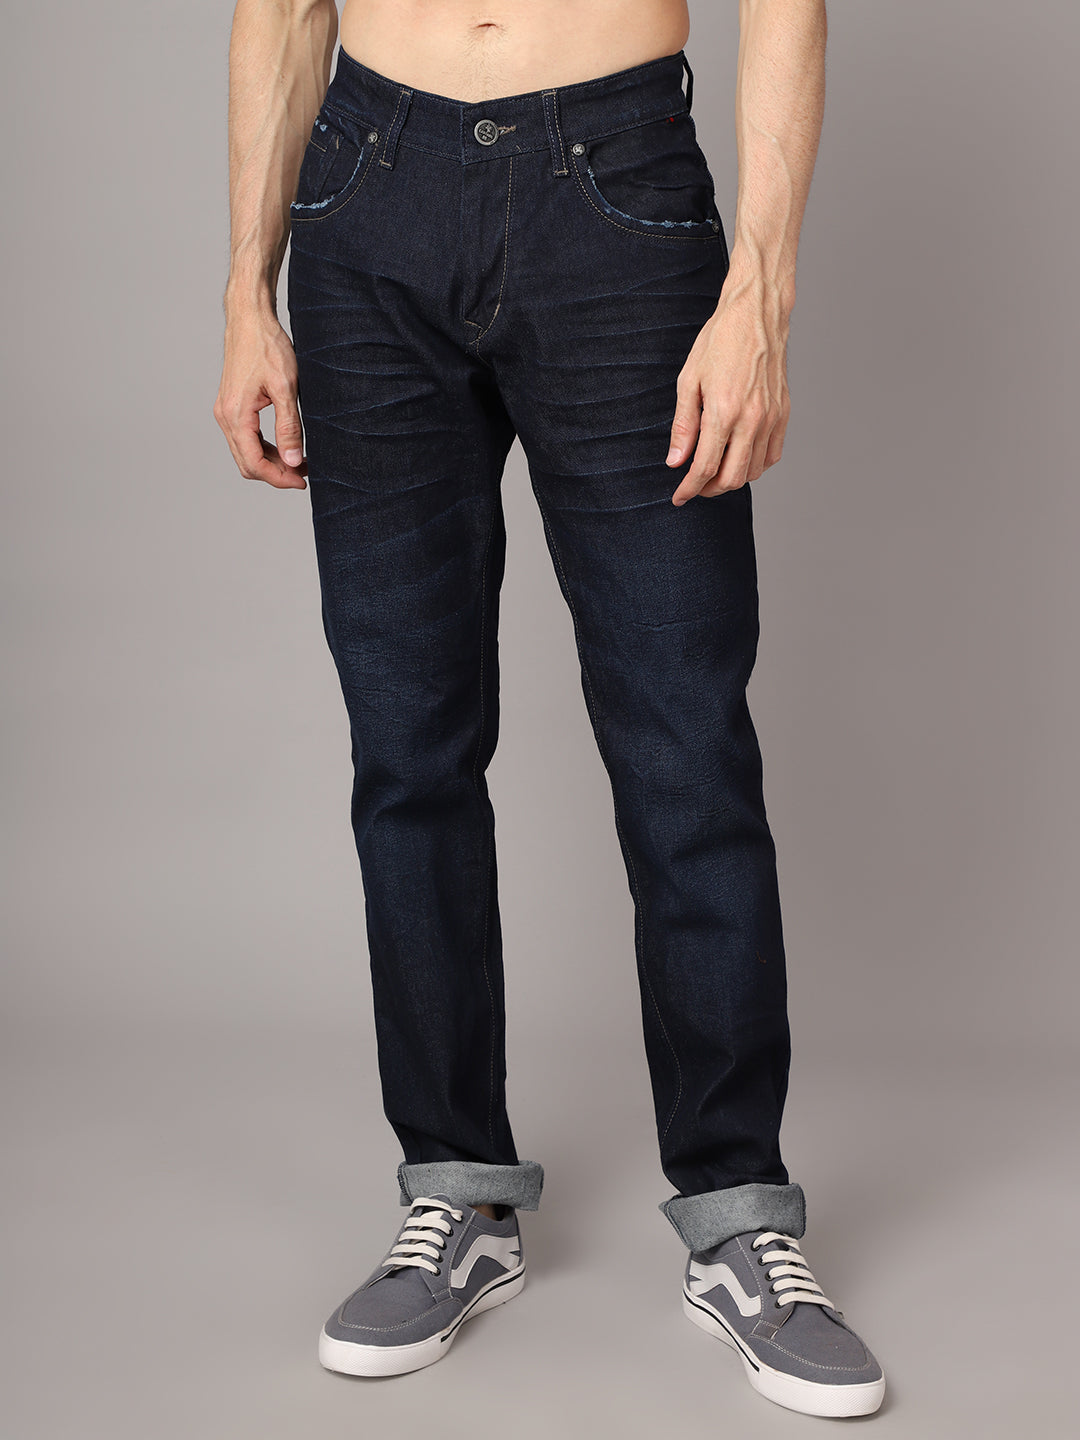 Timeless Dark Denim Jeans: A Wardrobe Staple for Every Fashion Enthusiast